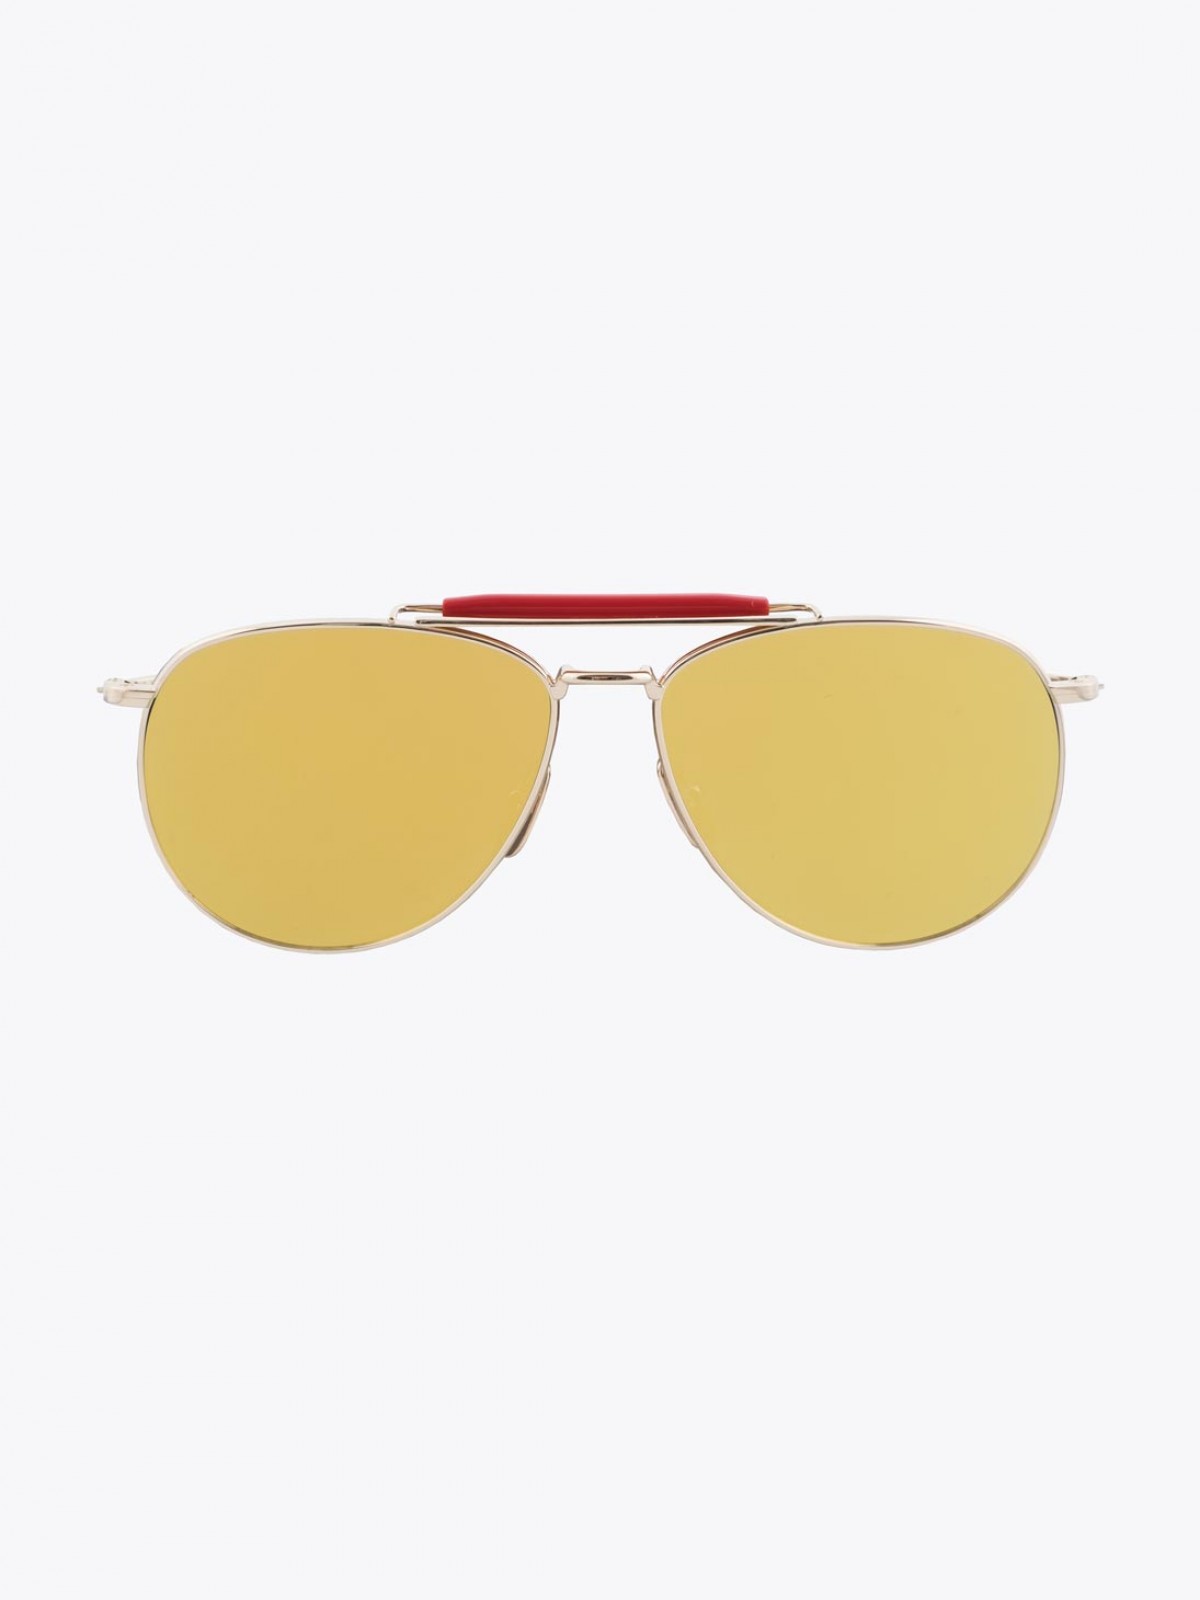 thom-browne-tb-015-sunglasses-gold—red-1